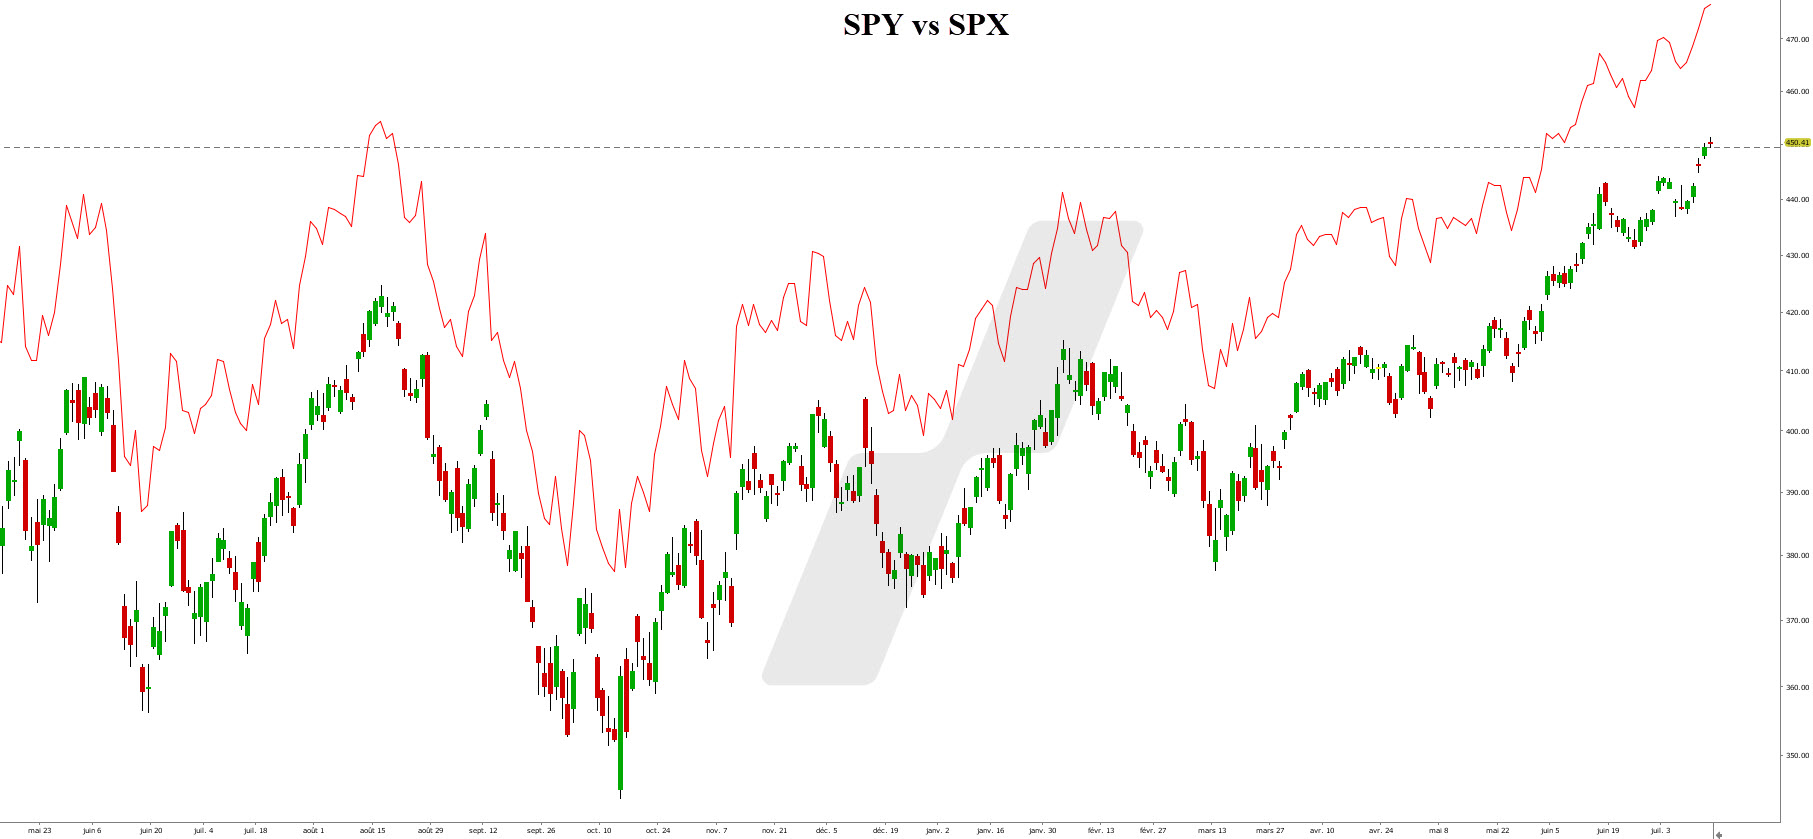 options spy - options spx - SPY vs SPX - trading chart